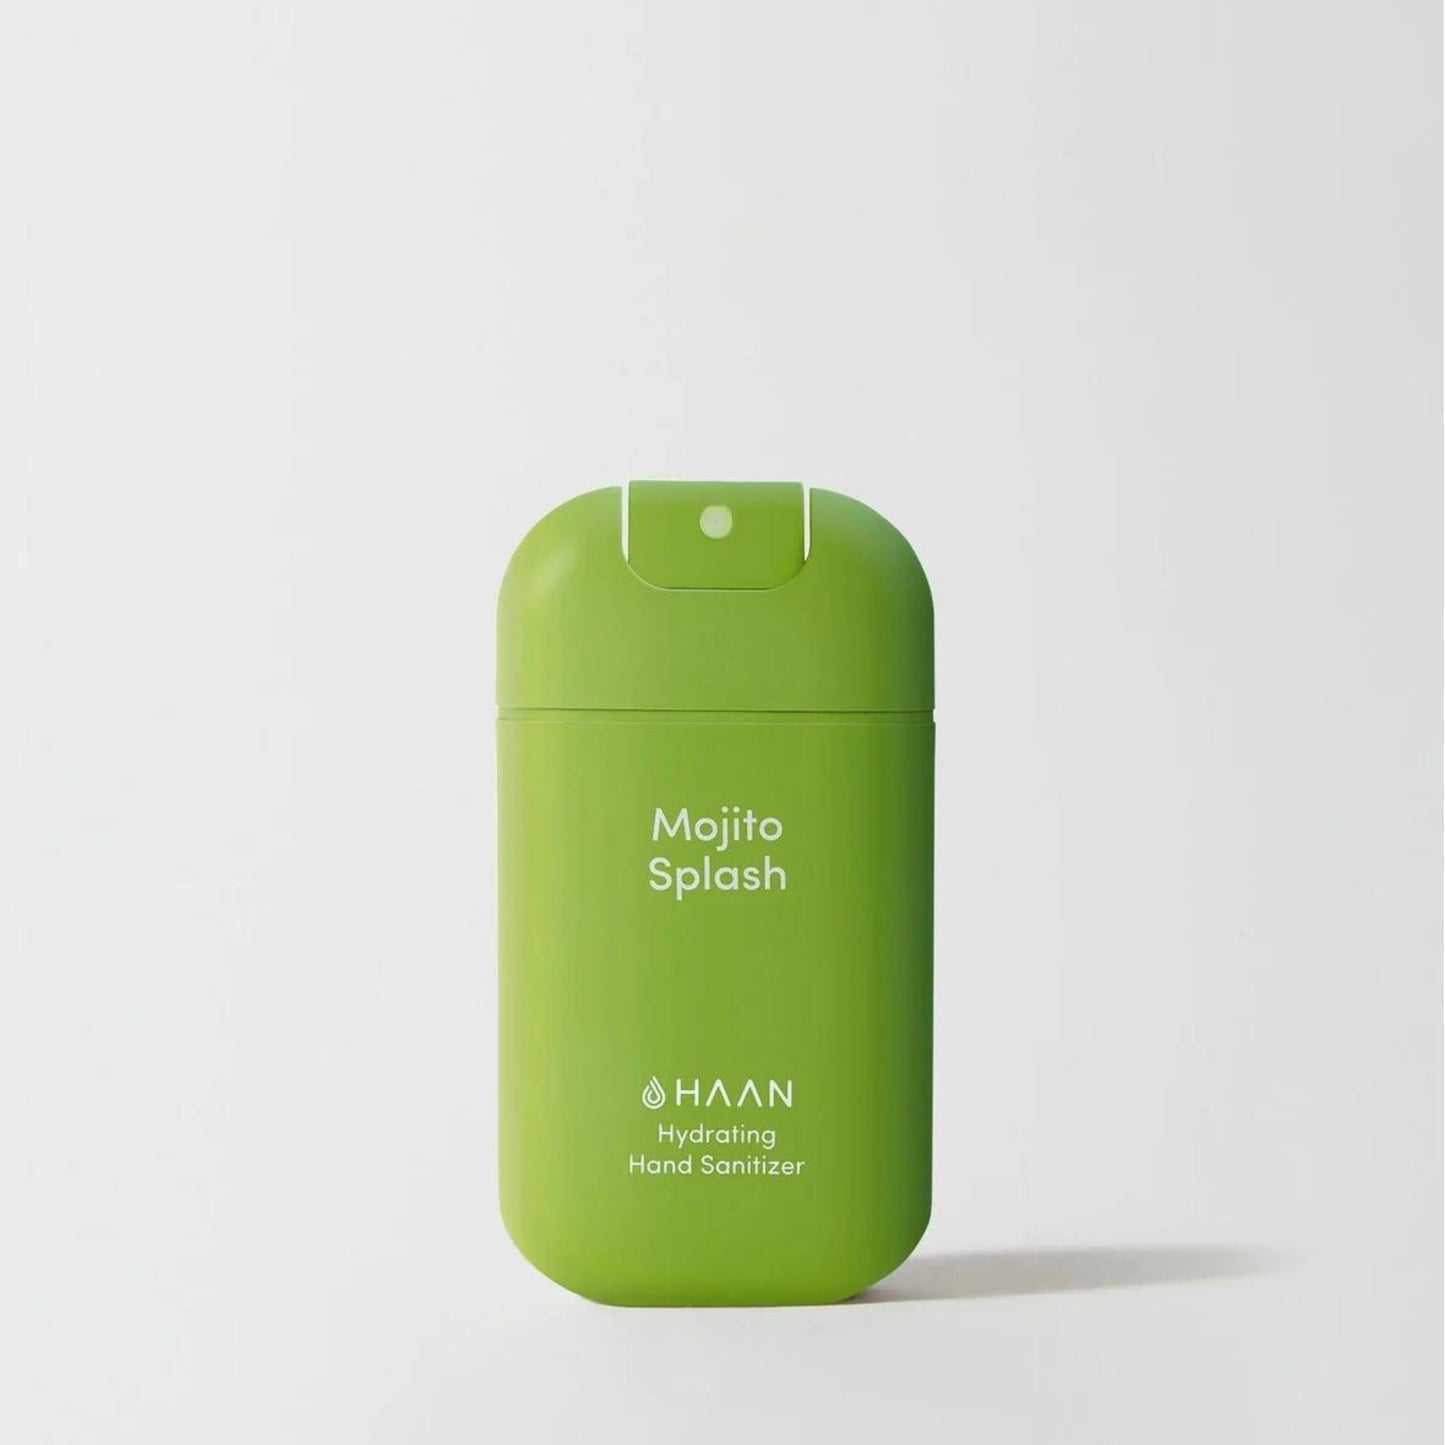 Mojito Splash Hand Sanitizer by HAAN